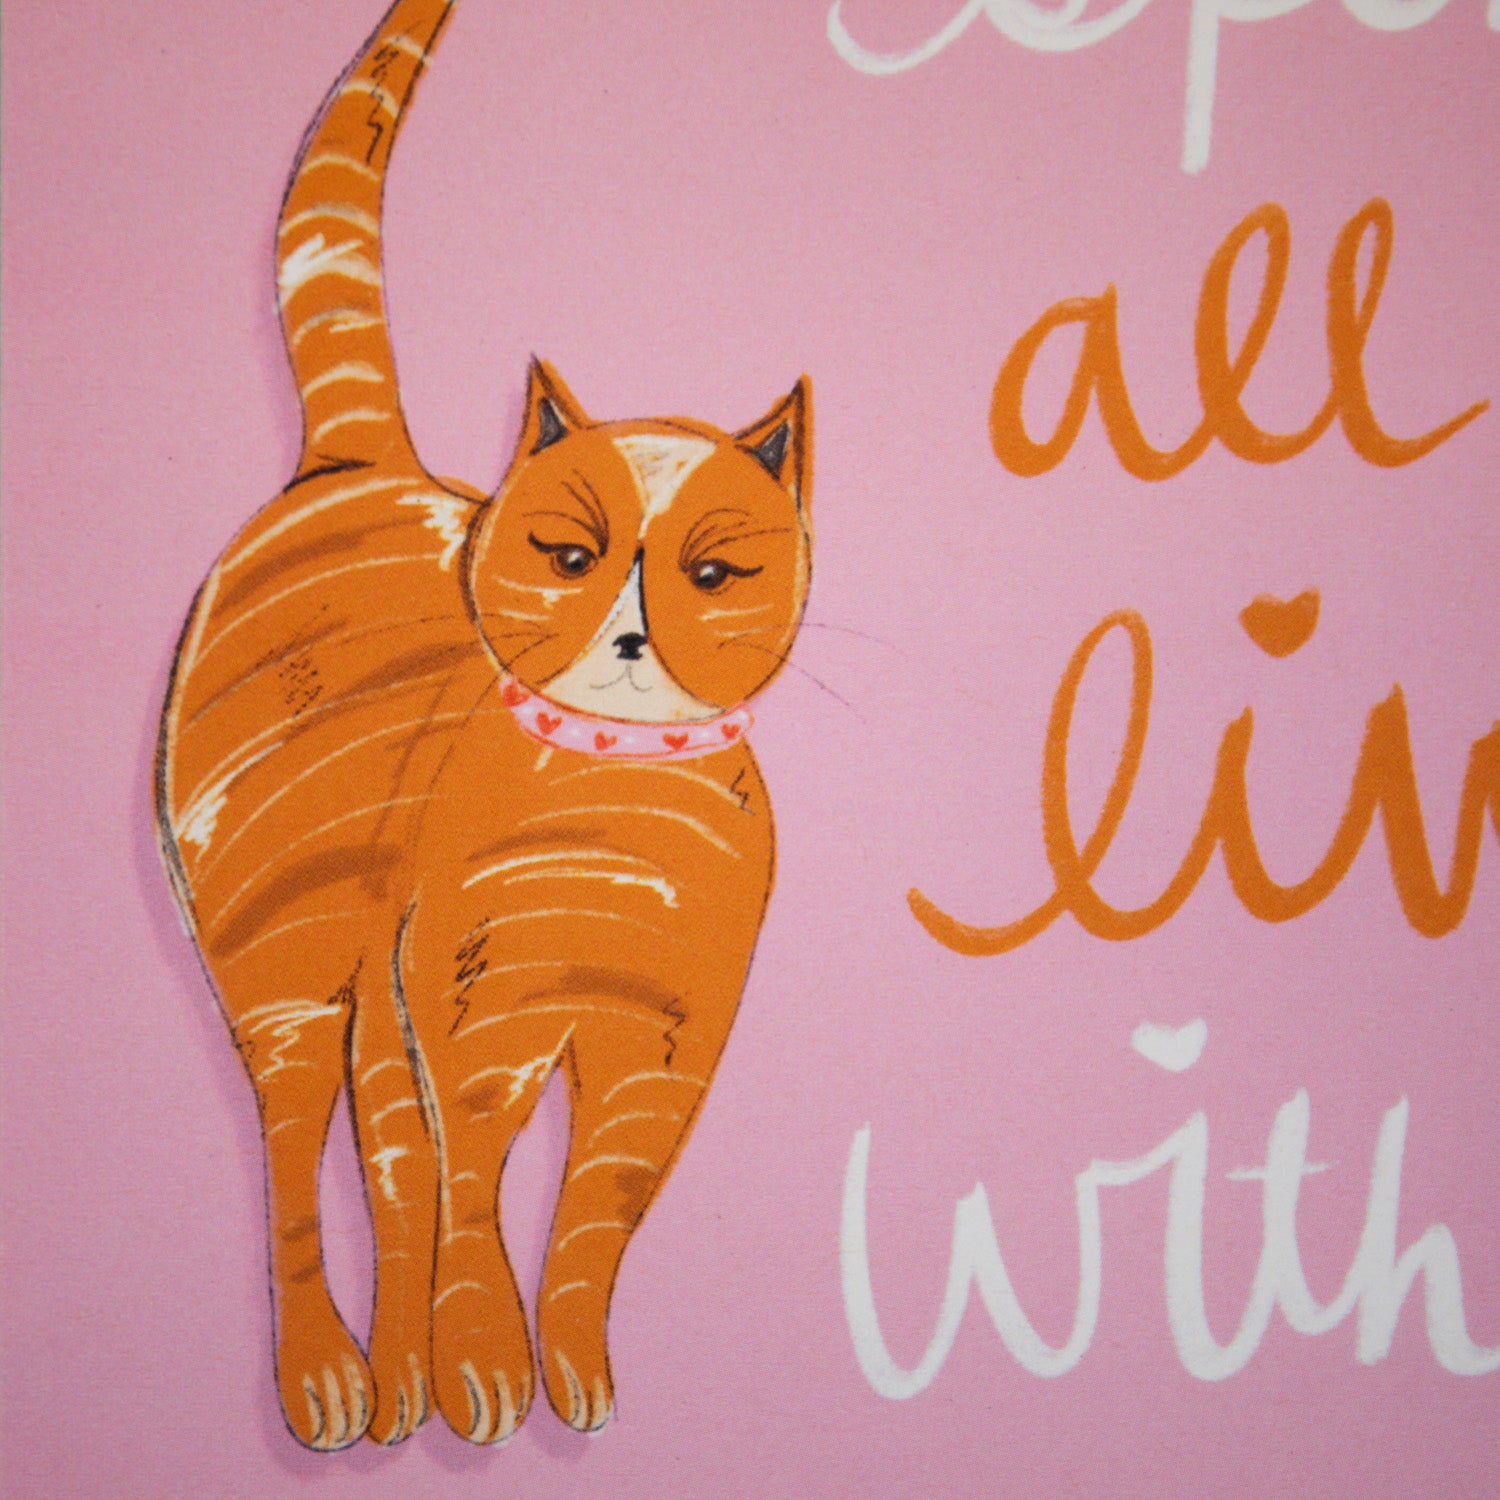 Nine Lives Tabby Cat Greeting Card